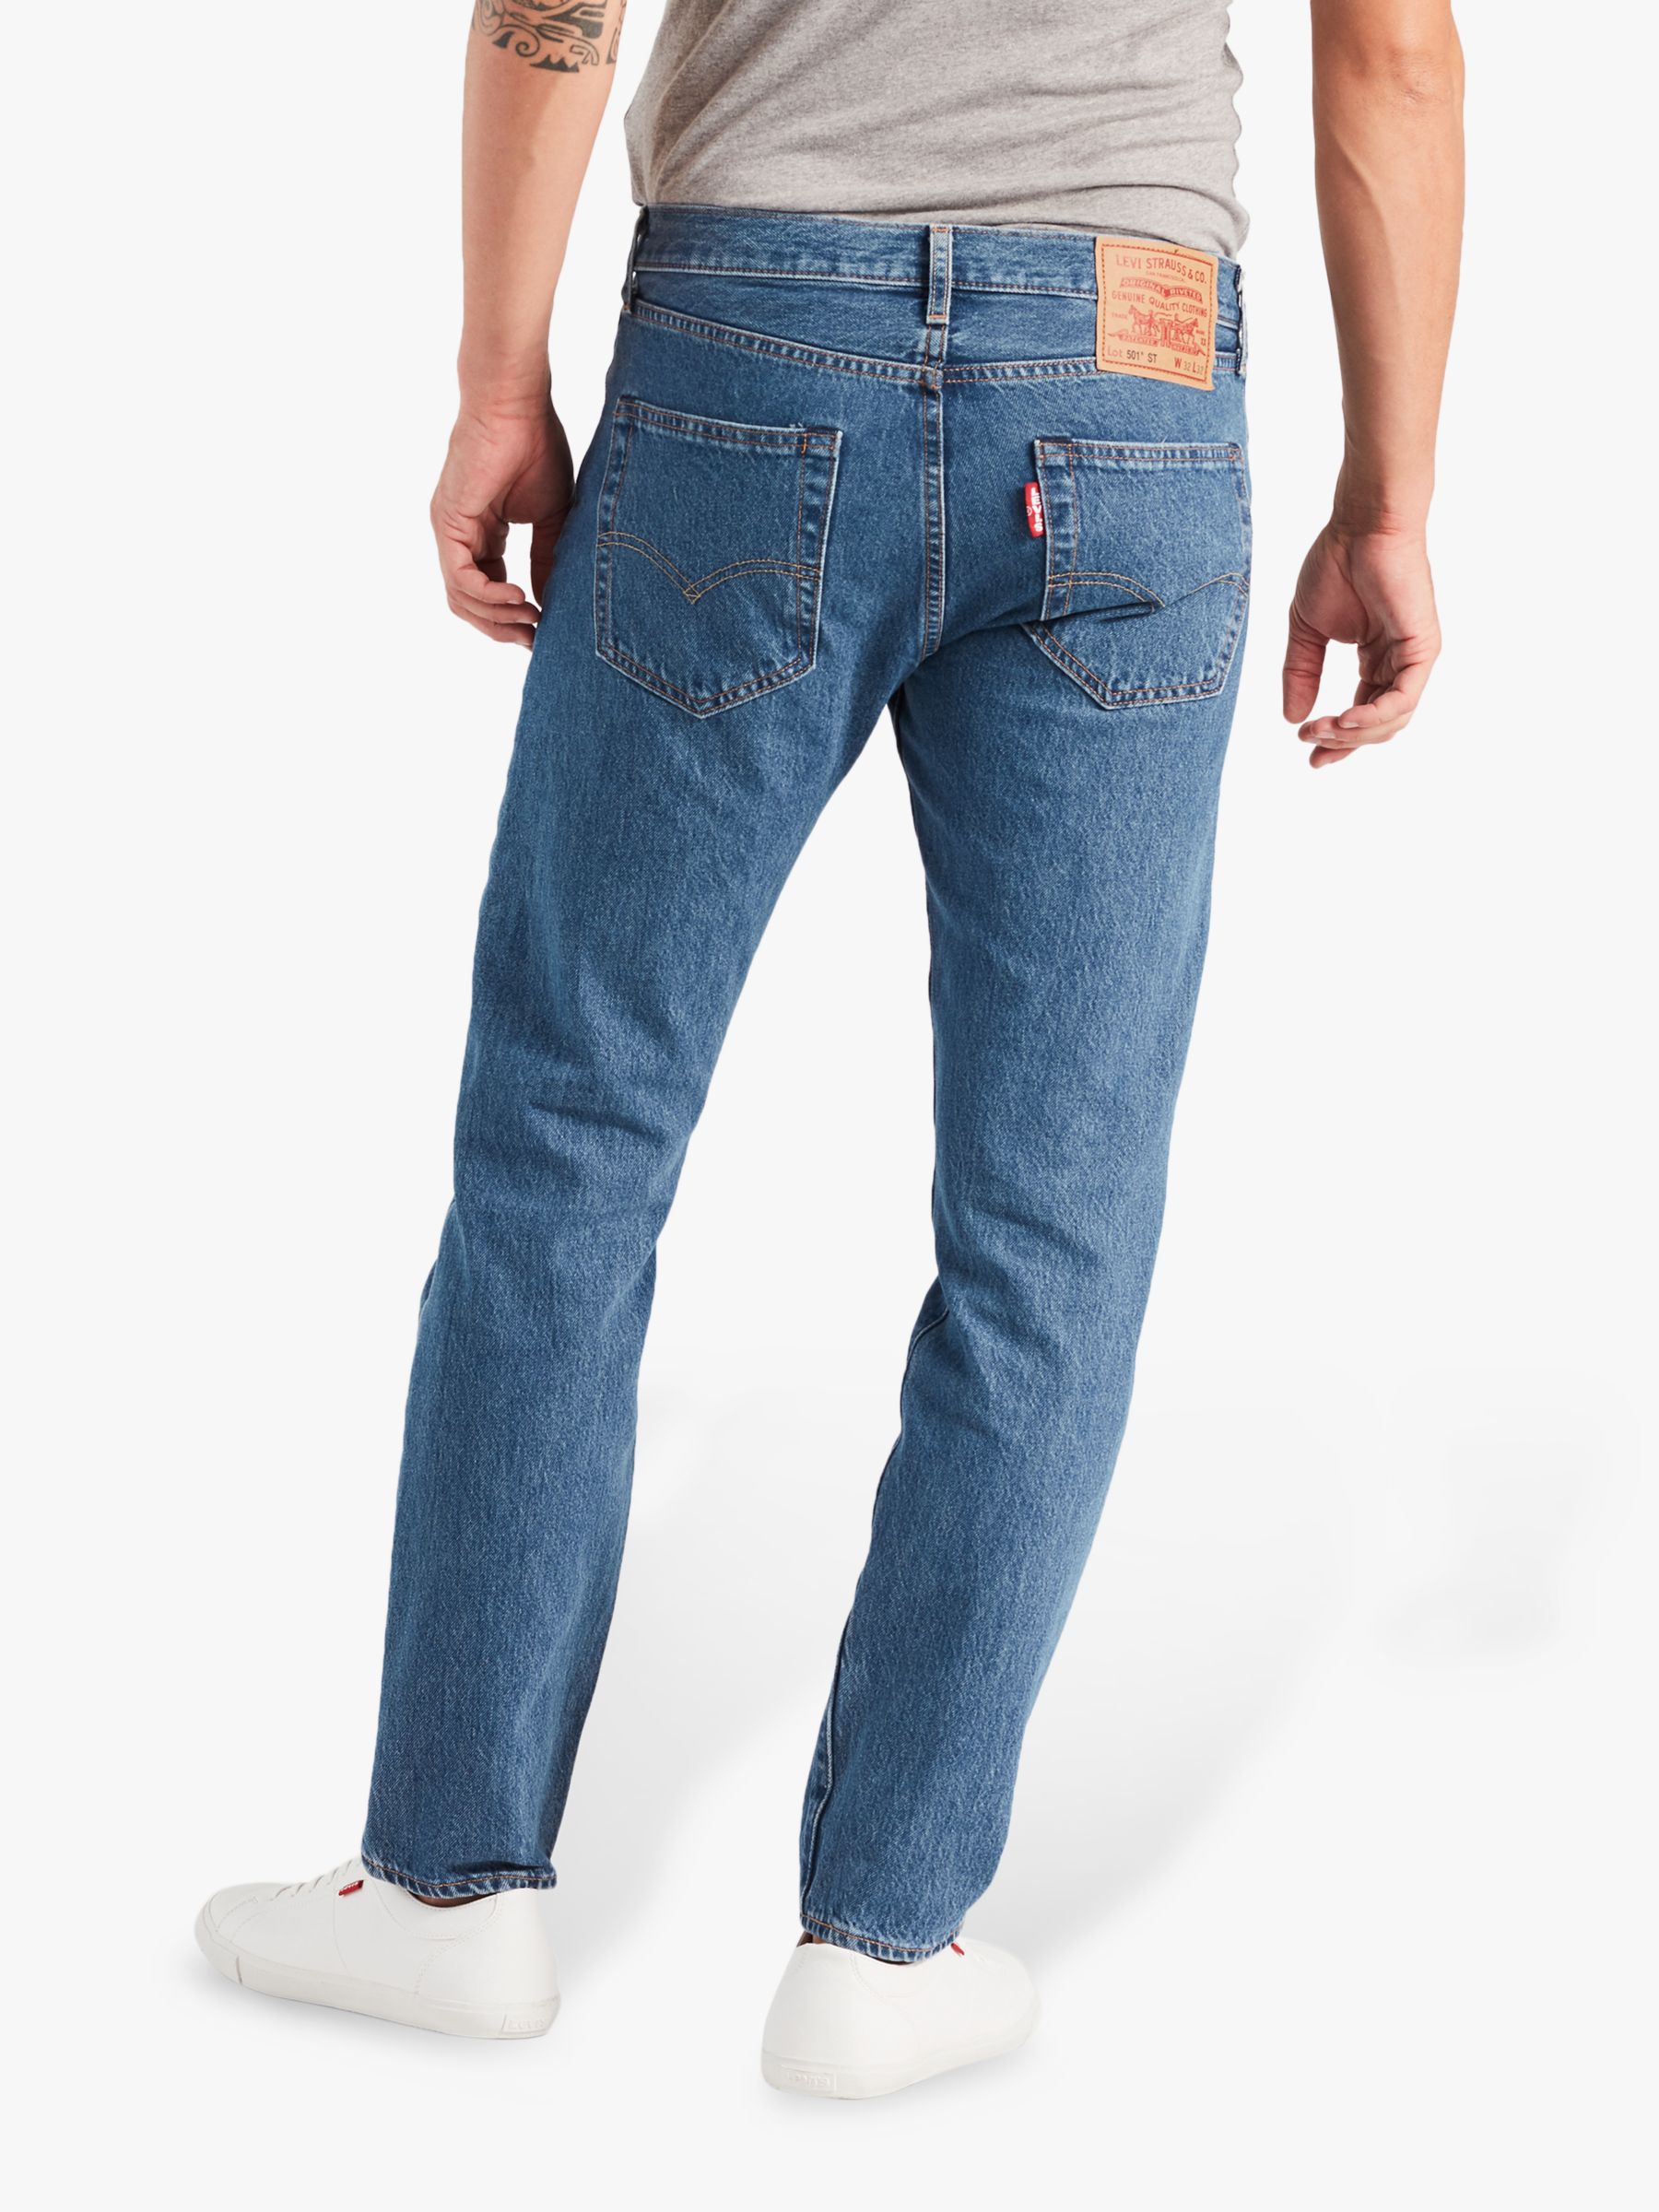 levi 501 taper jeans men's